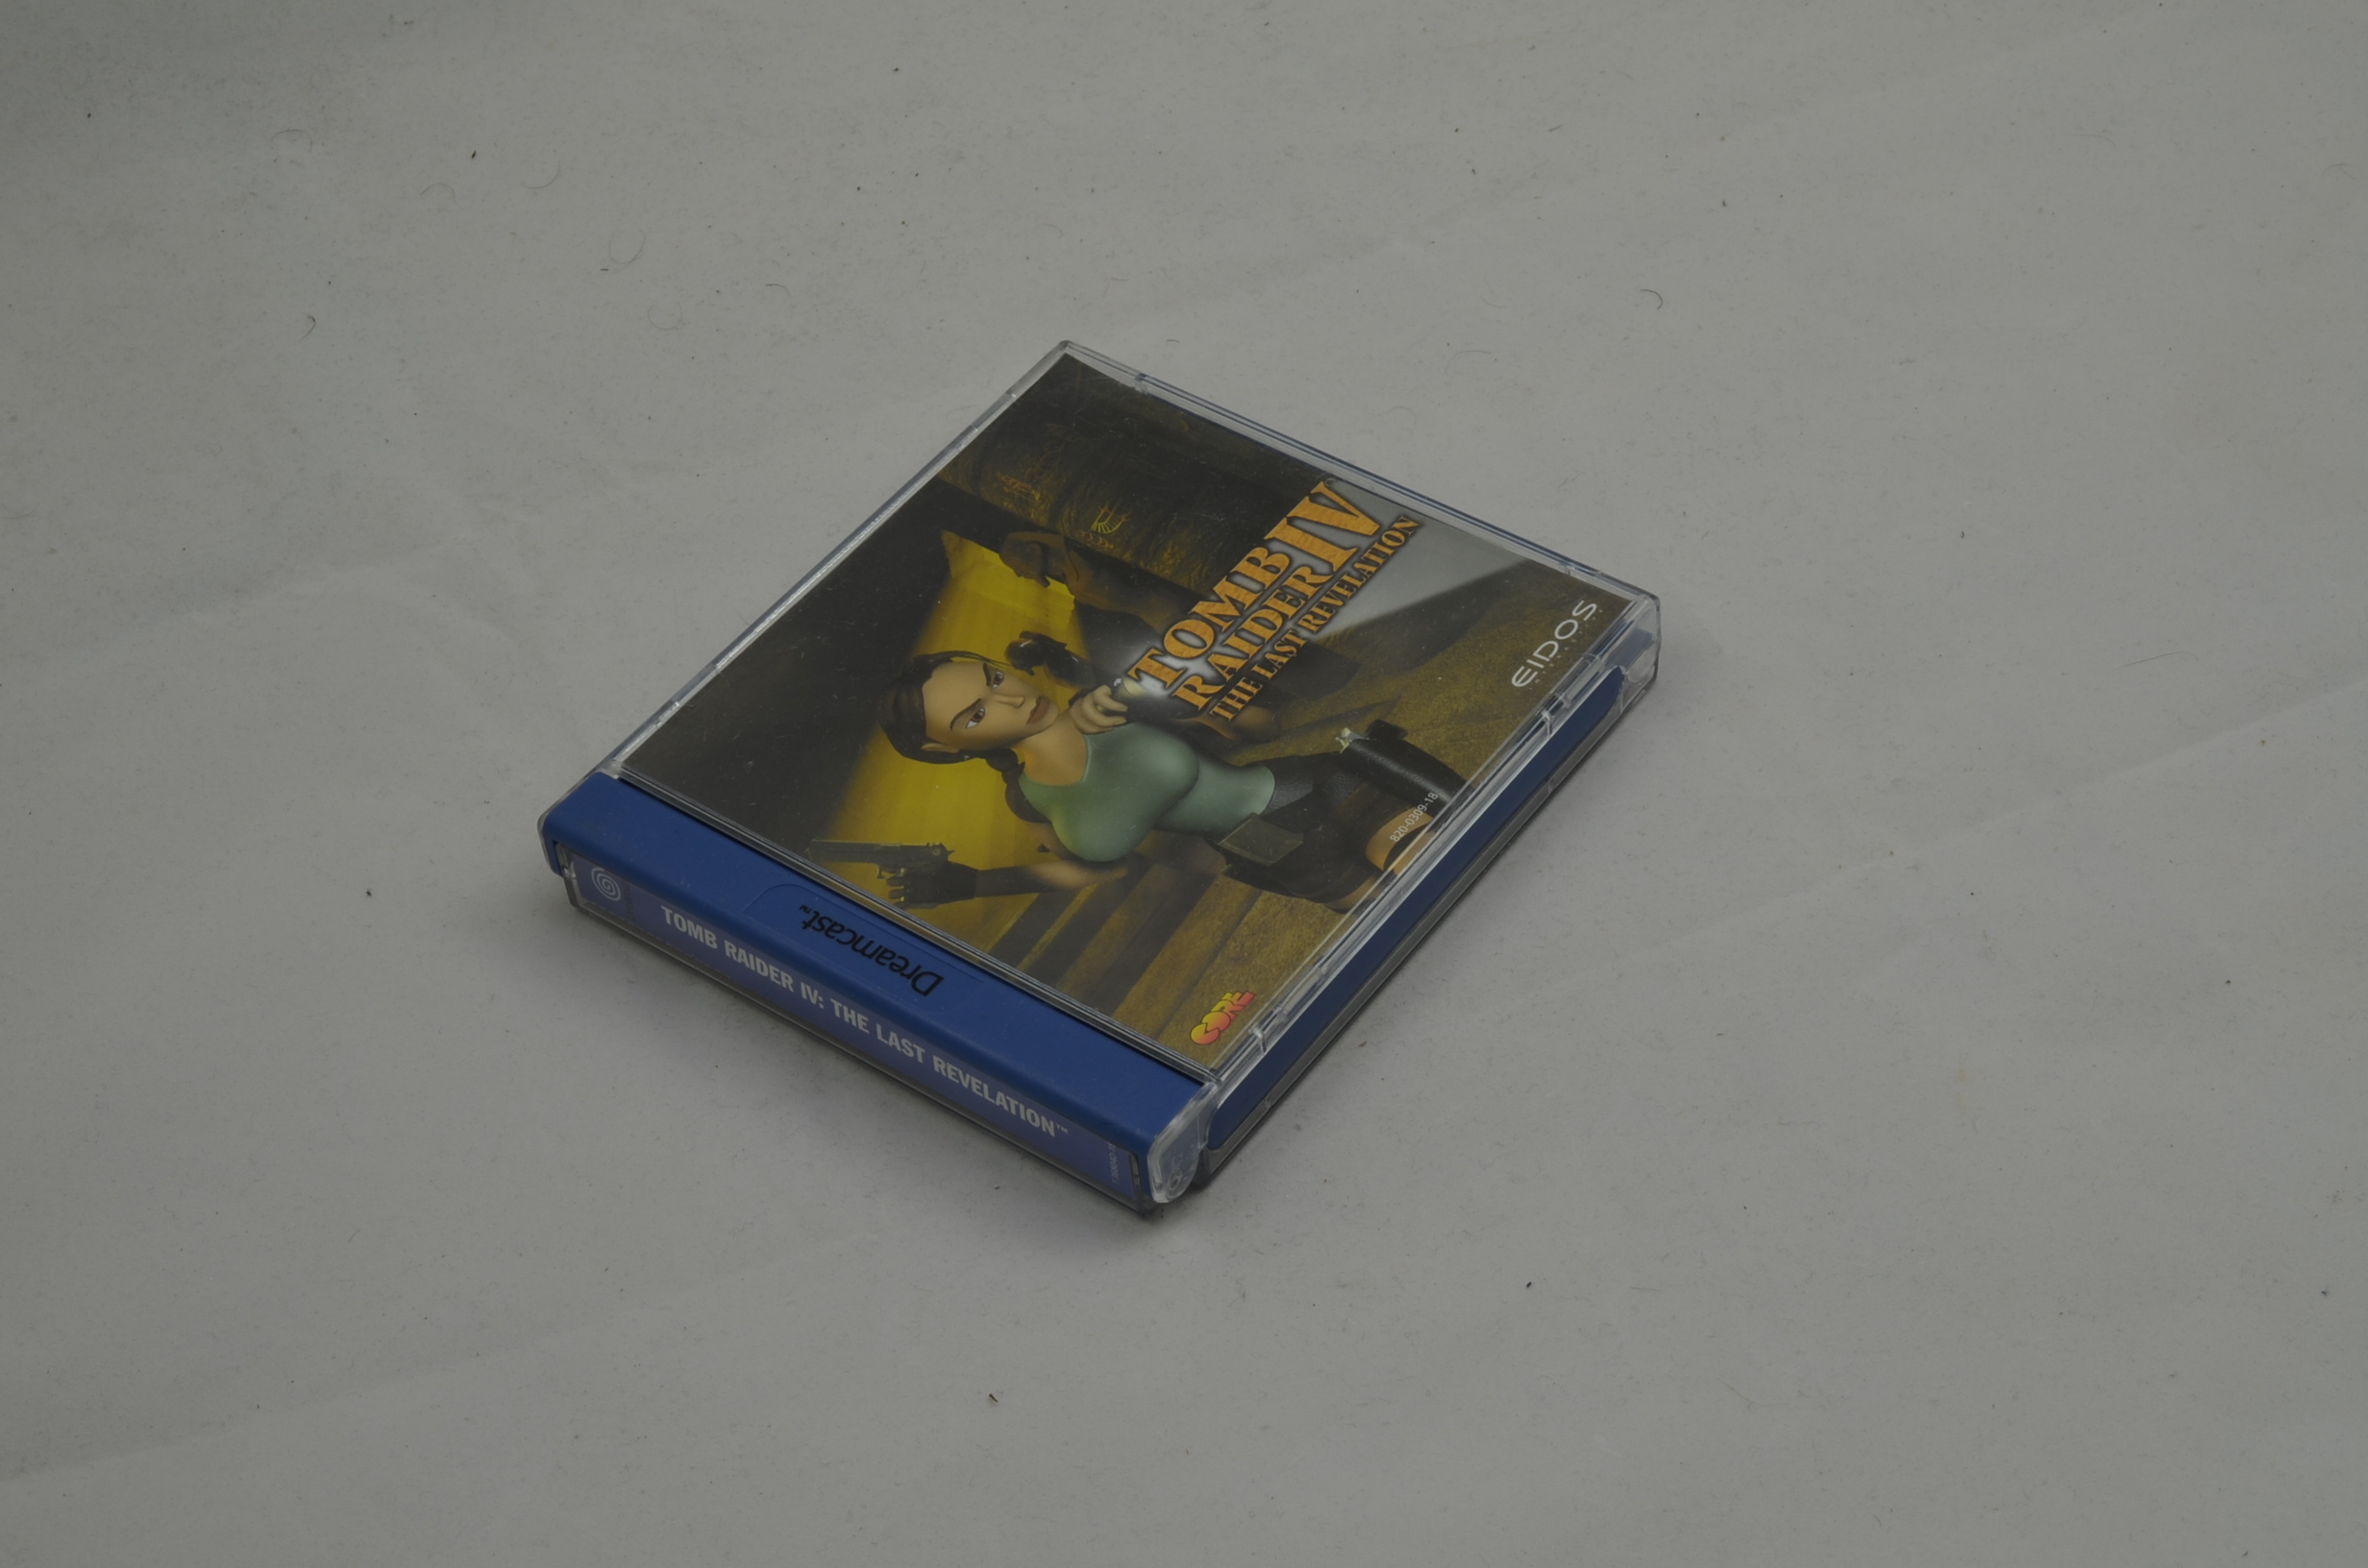 Produktbild von Tomb Raider IV Last Revelation Sega Dreamcast Spiel CIB (gut)